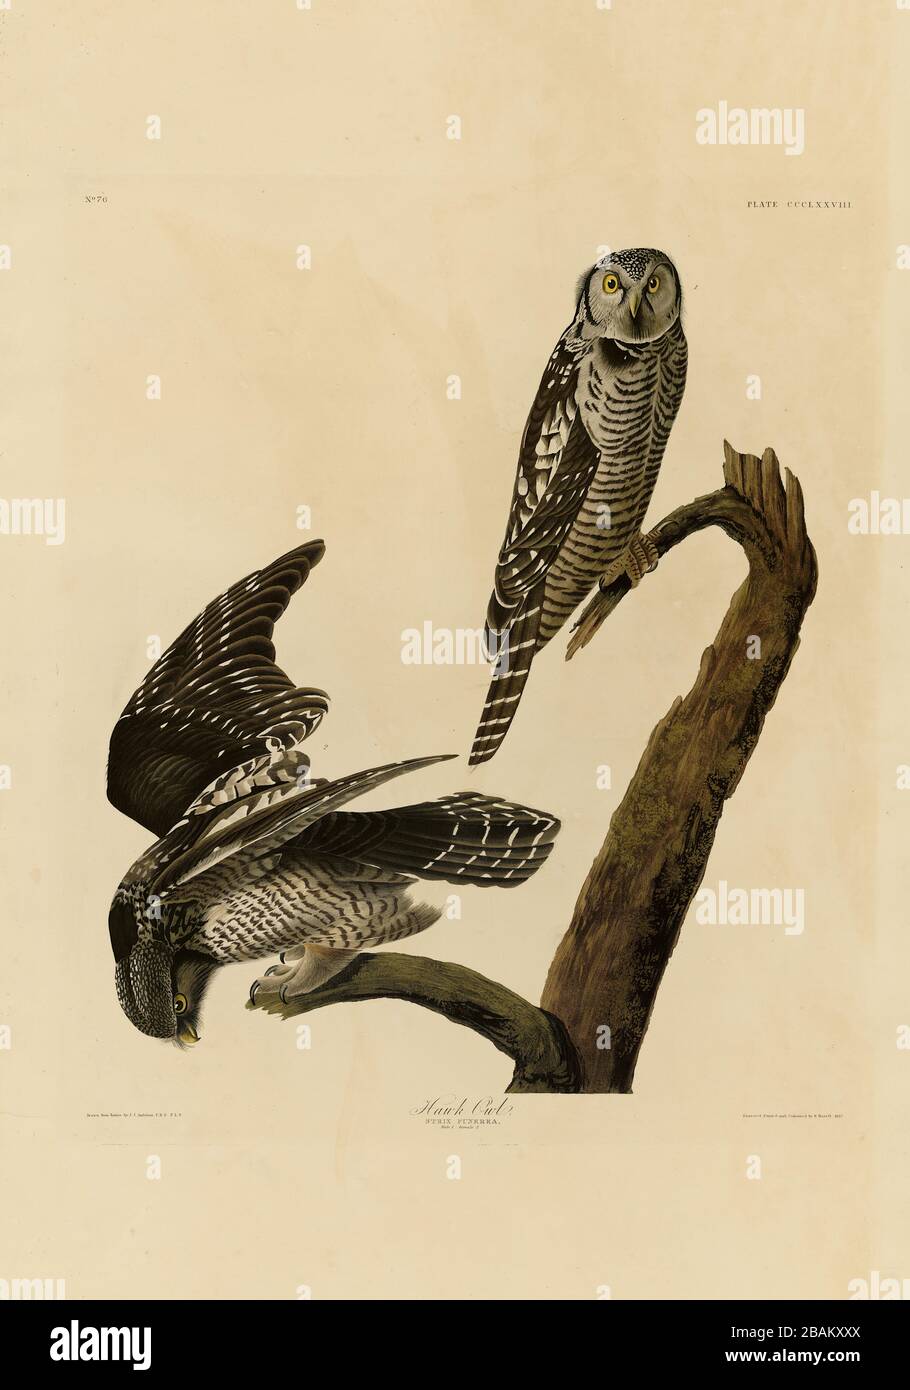 Plate 378 Hawk Owl (Northern Hawk Owl) The Birds of America folio (1827–1839) by John James Audubon - Very high resolution and quality edited image Stock Photo